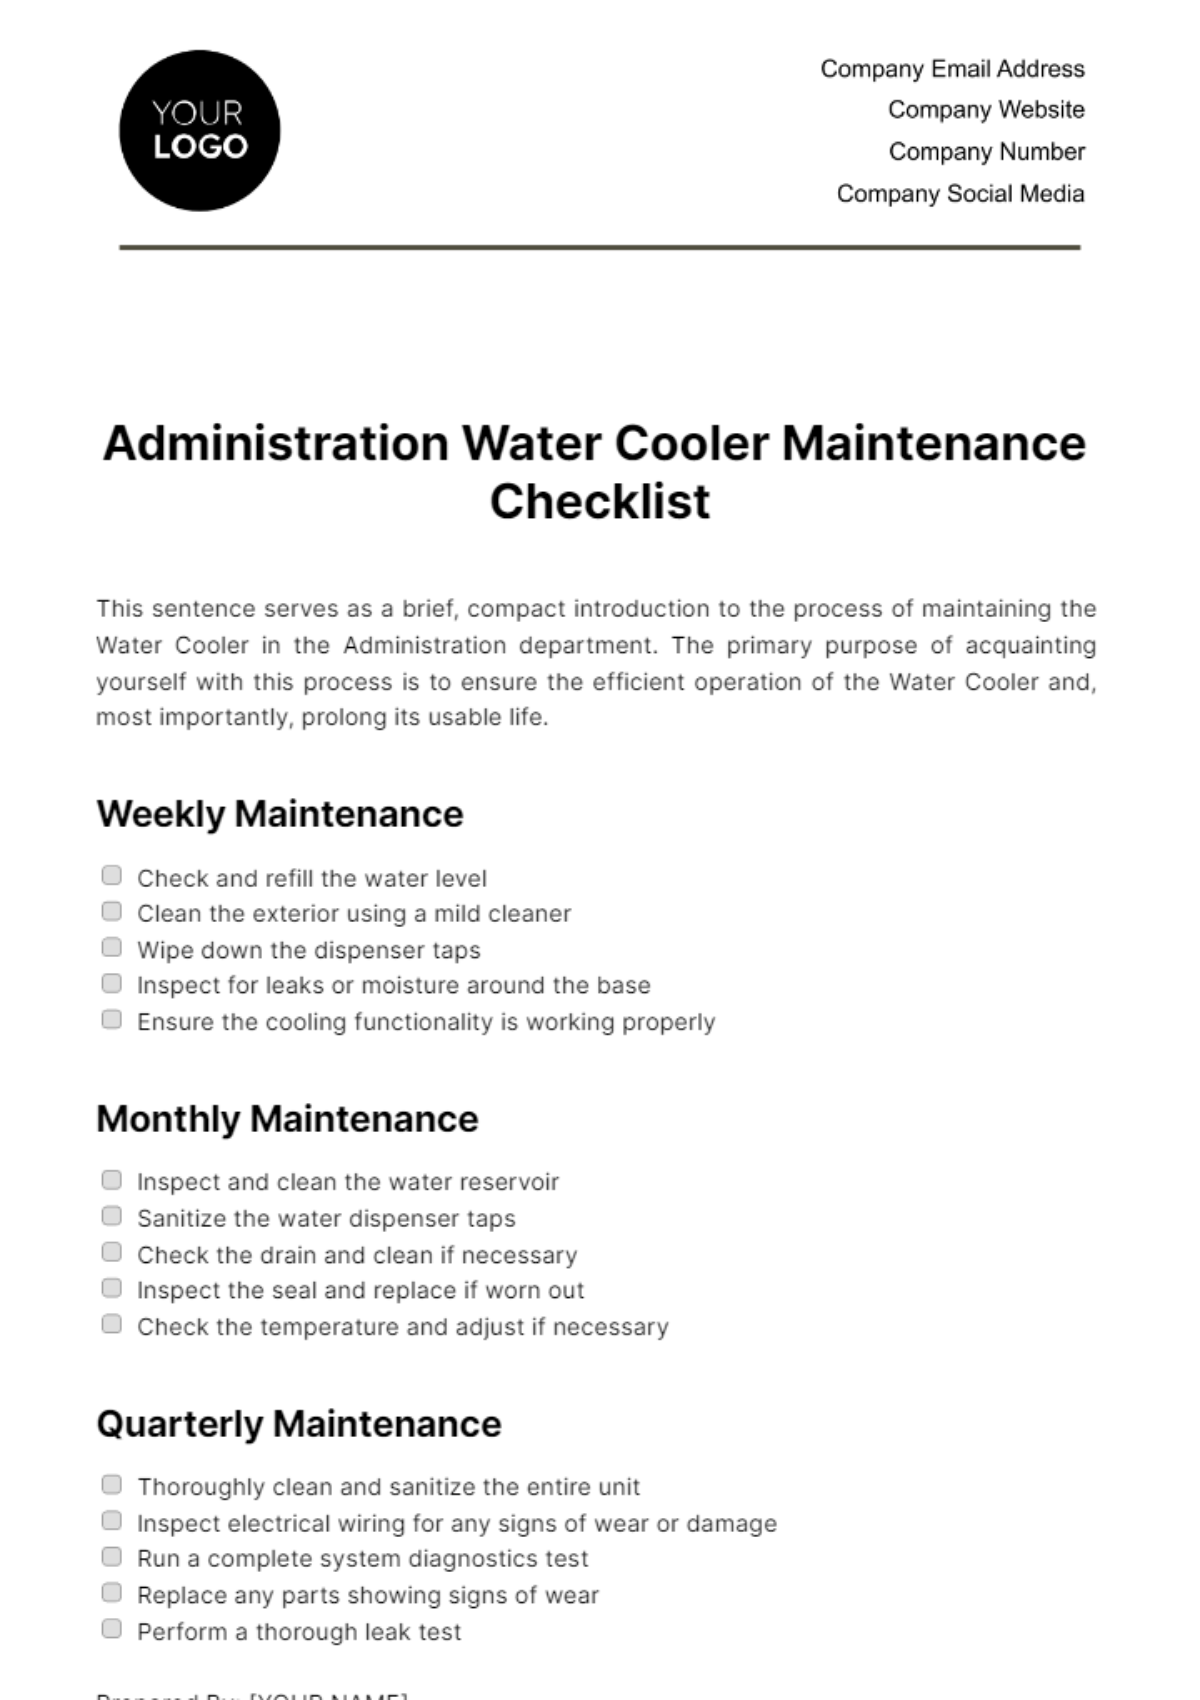 Administration Water Cooler Maintenance Checklist Template